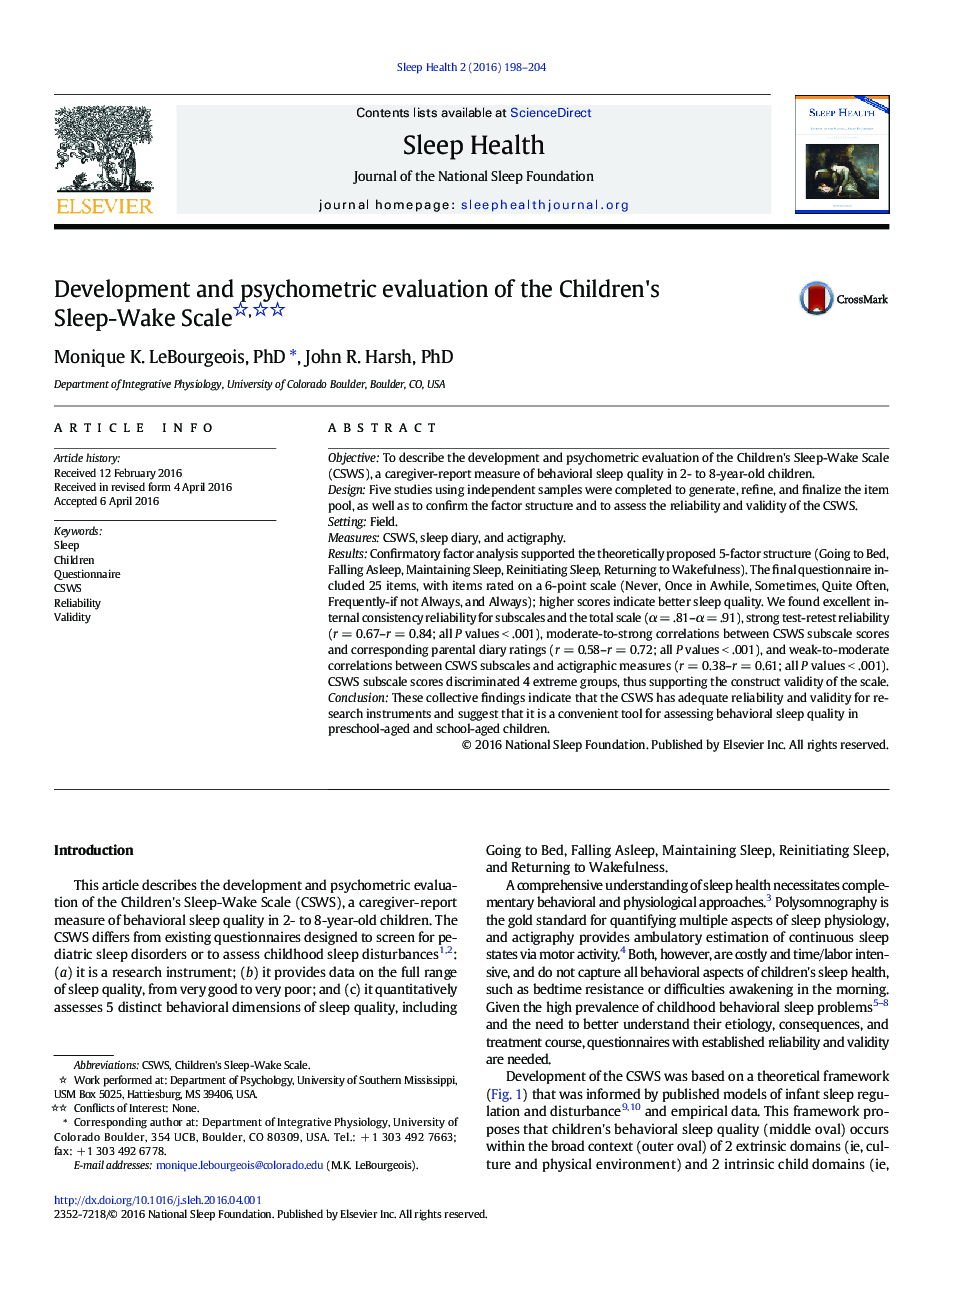 Development and psychometric evaluation of the Children's Sleep-Wake Scale